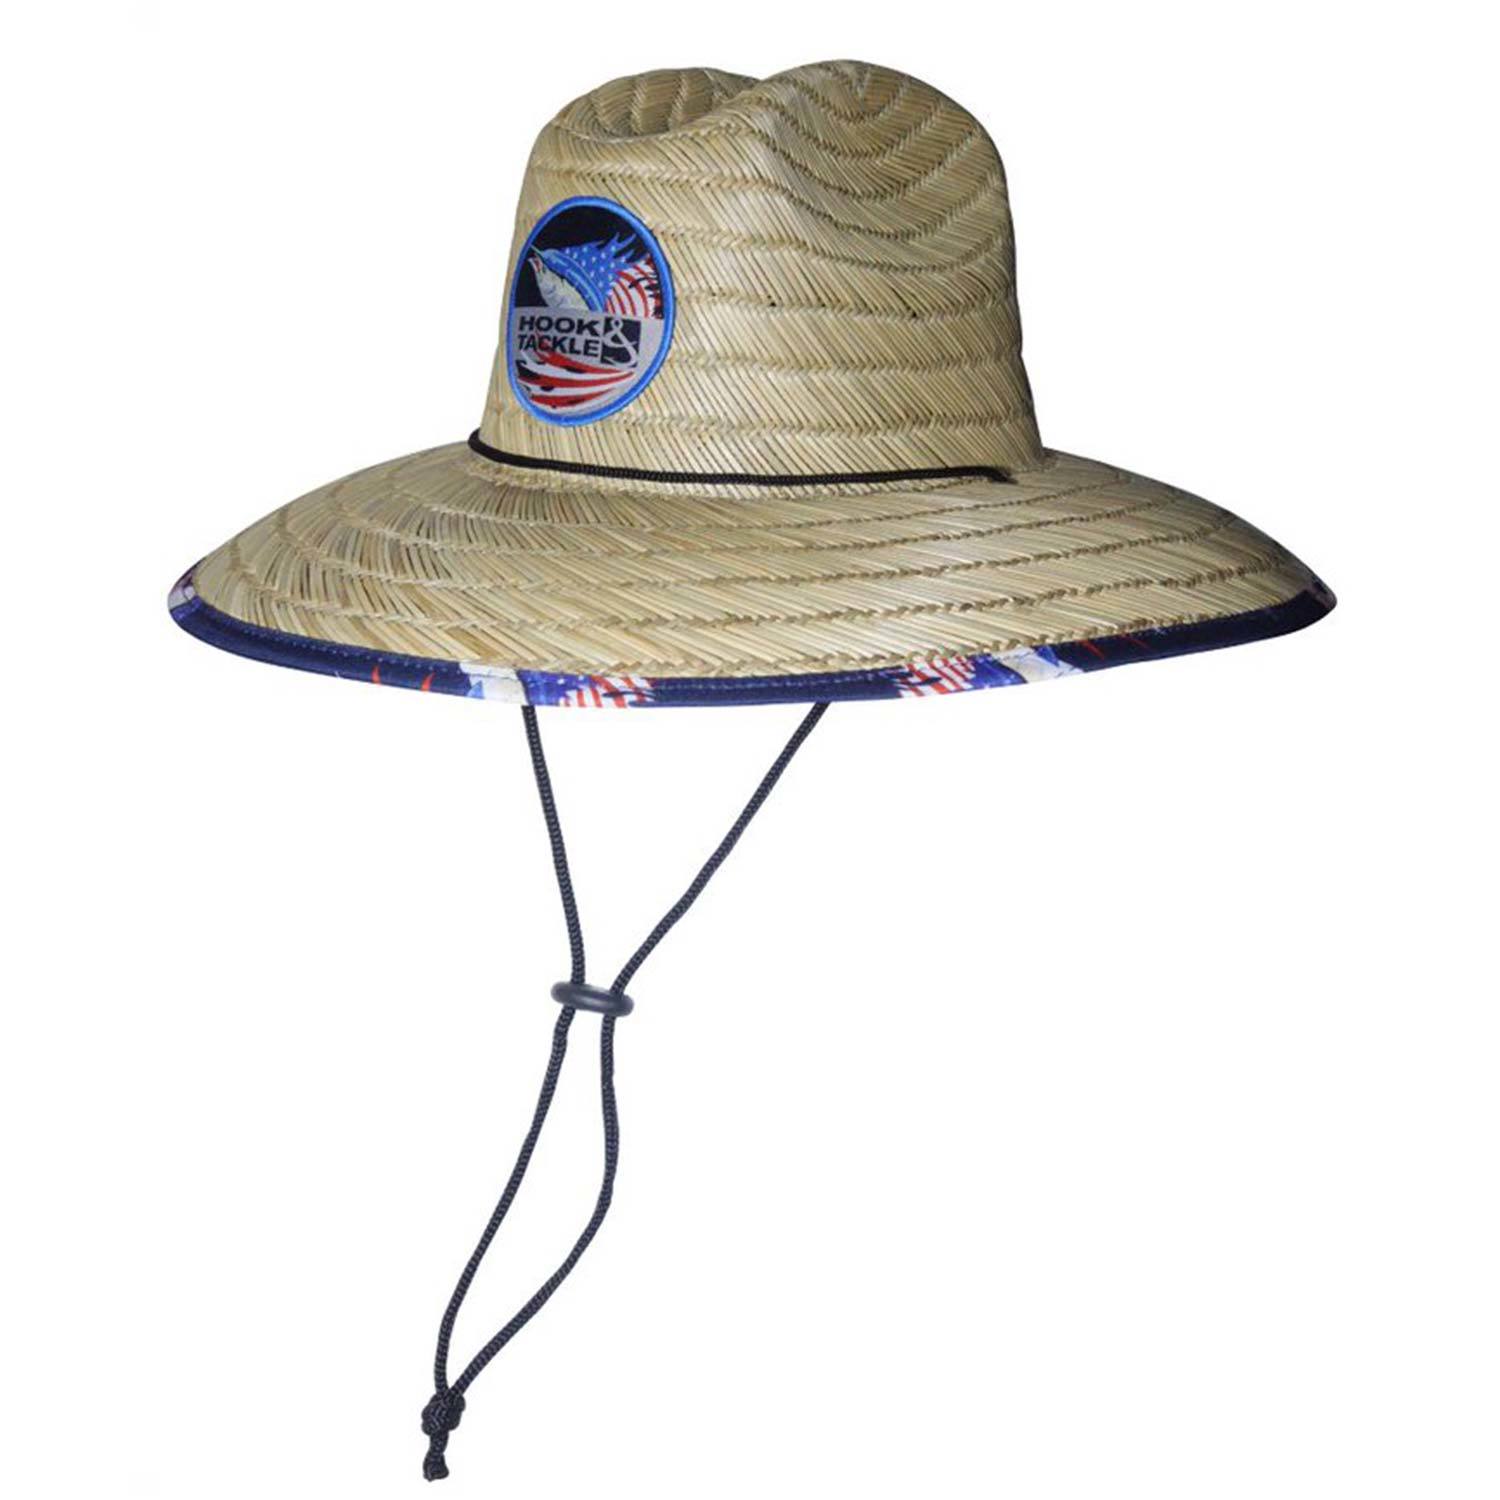 HOOK & TACKLE Sails & Stripes Lifeguard Straw Hat